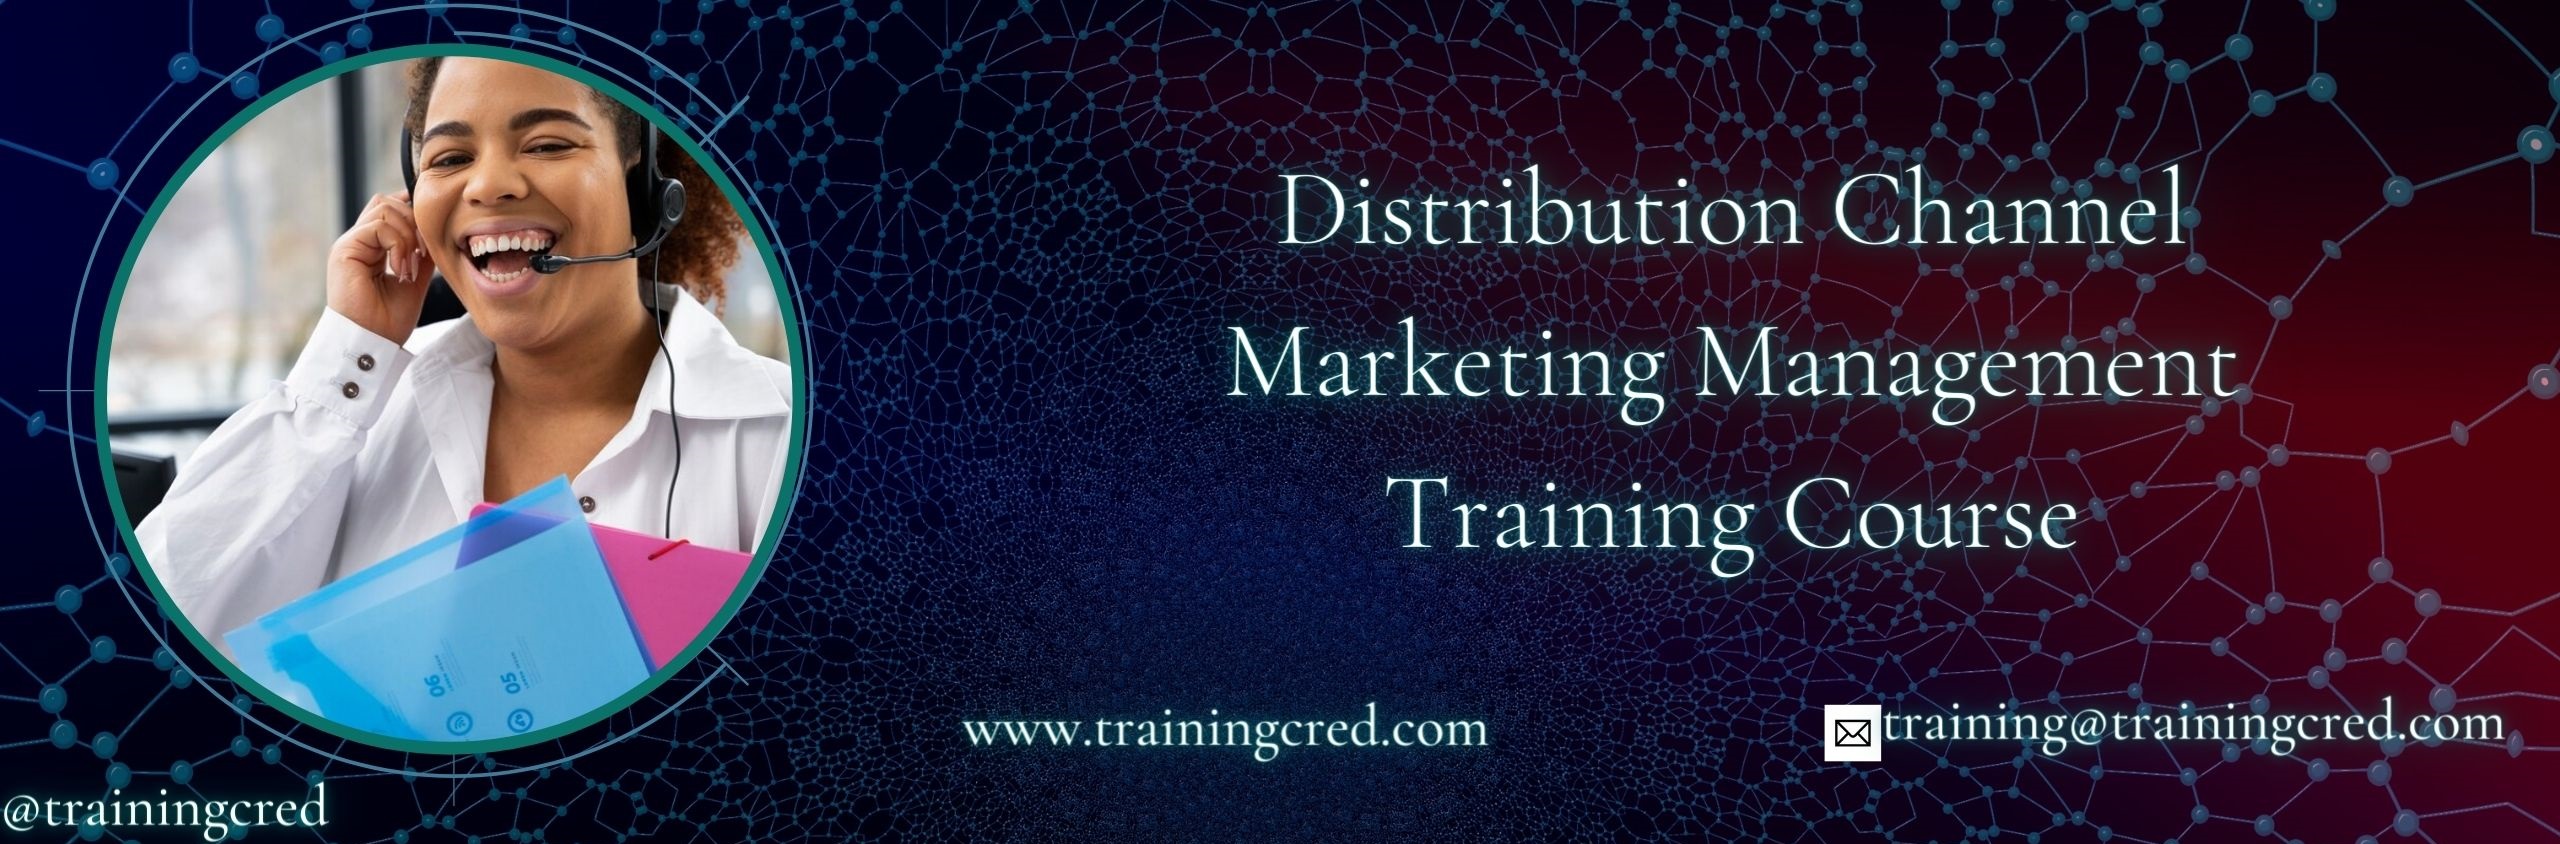 Distribution Channel Marketing Management Training